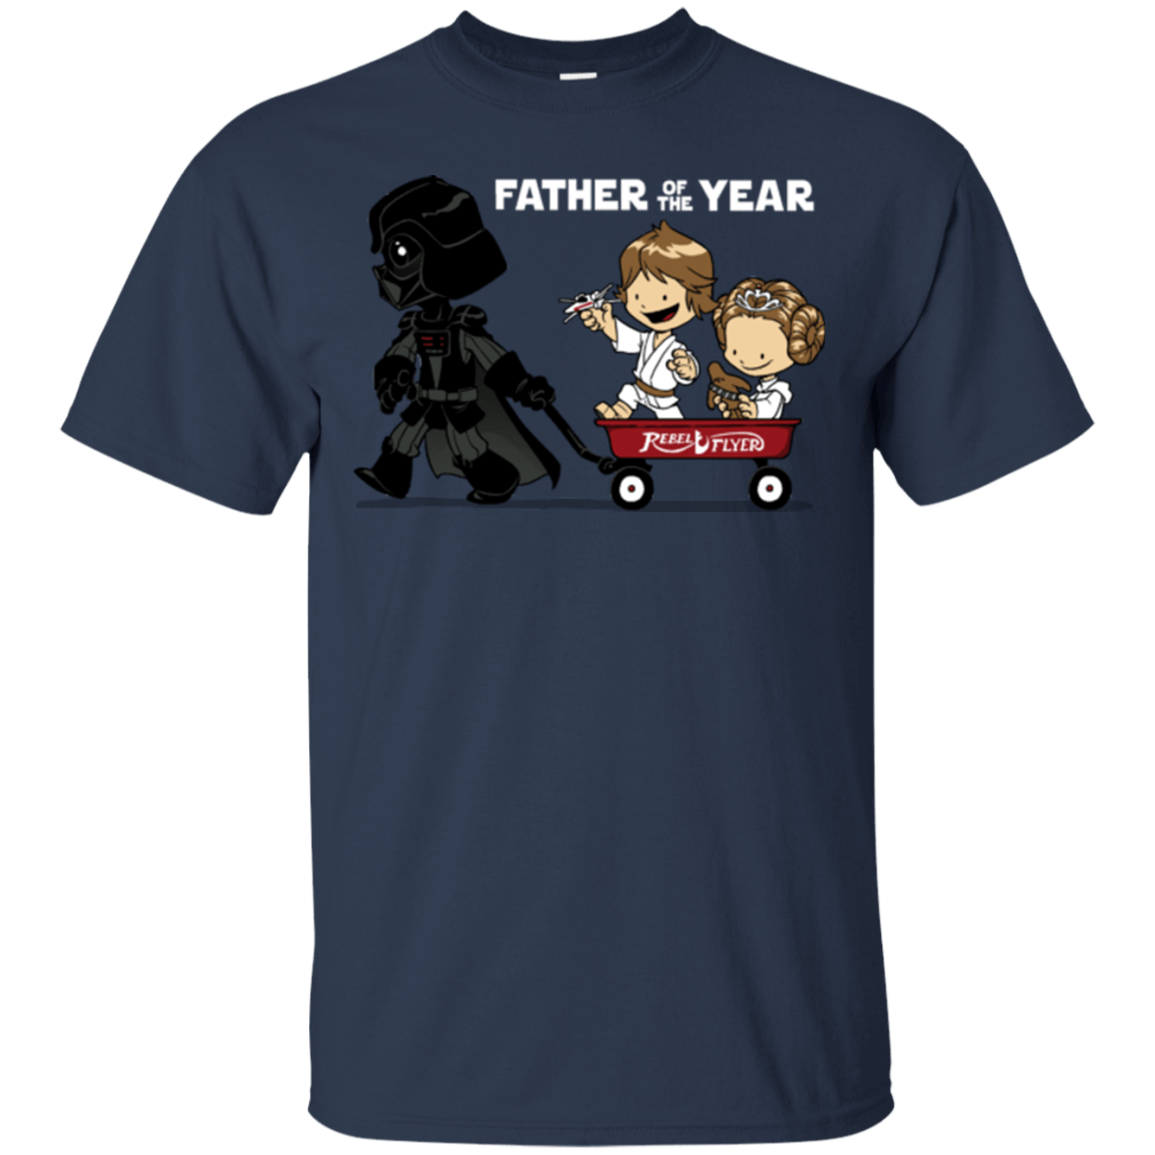 T-Shirts Navy / Small WagonRide T-Shirt